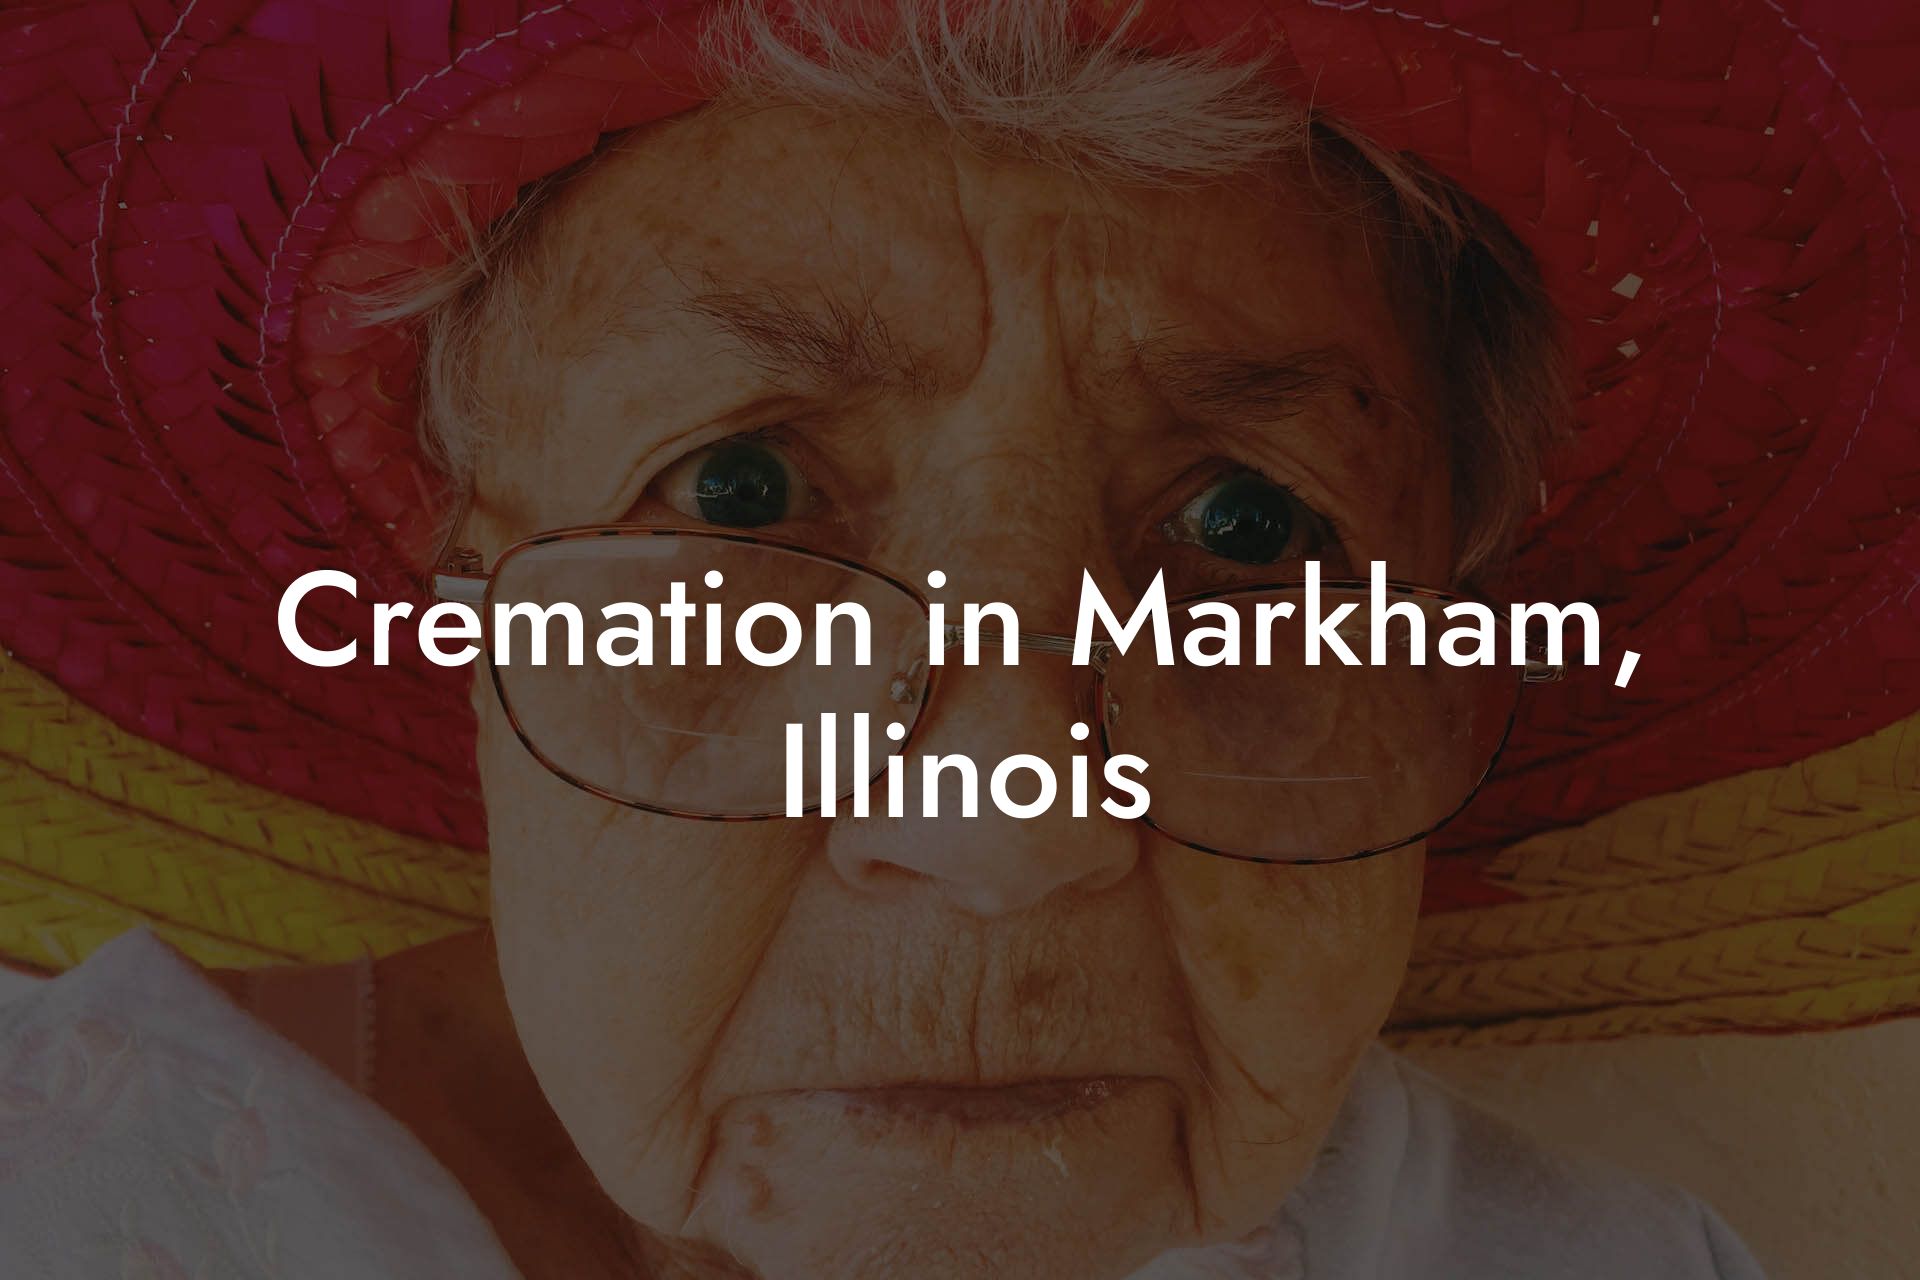 Cremation in Markham, Illinois